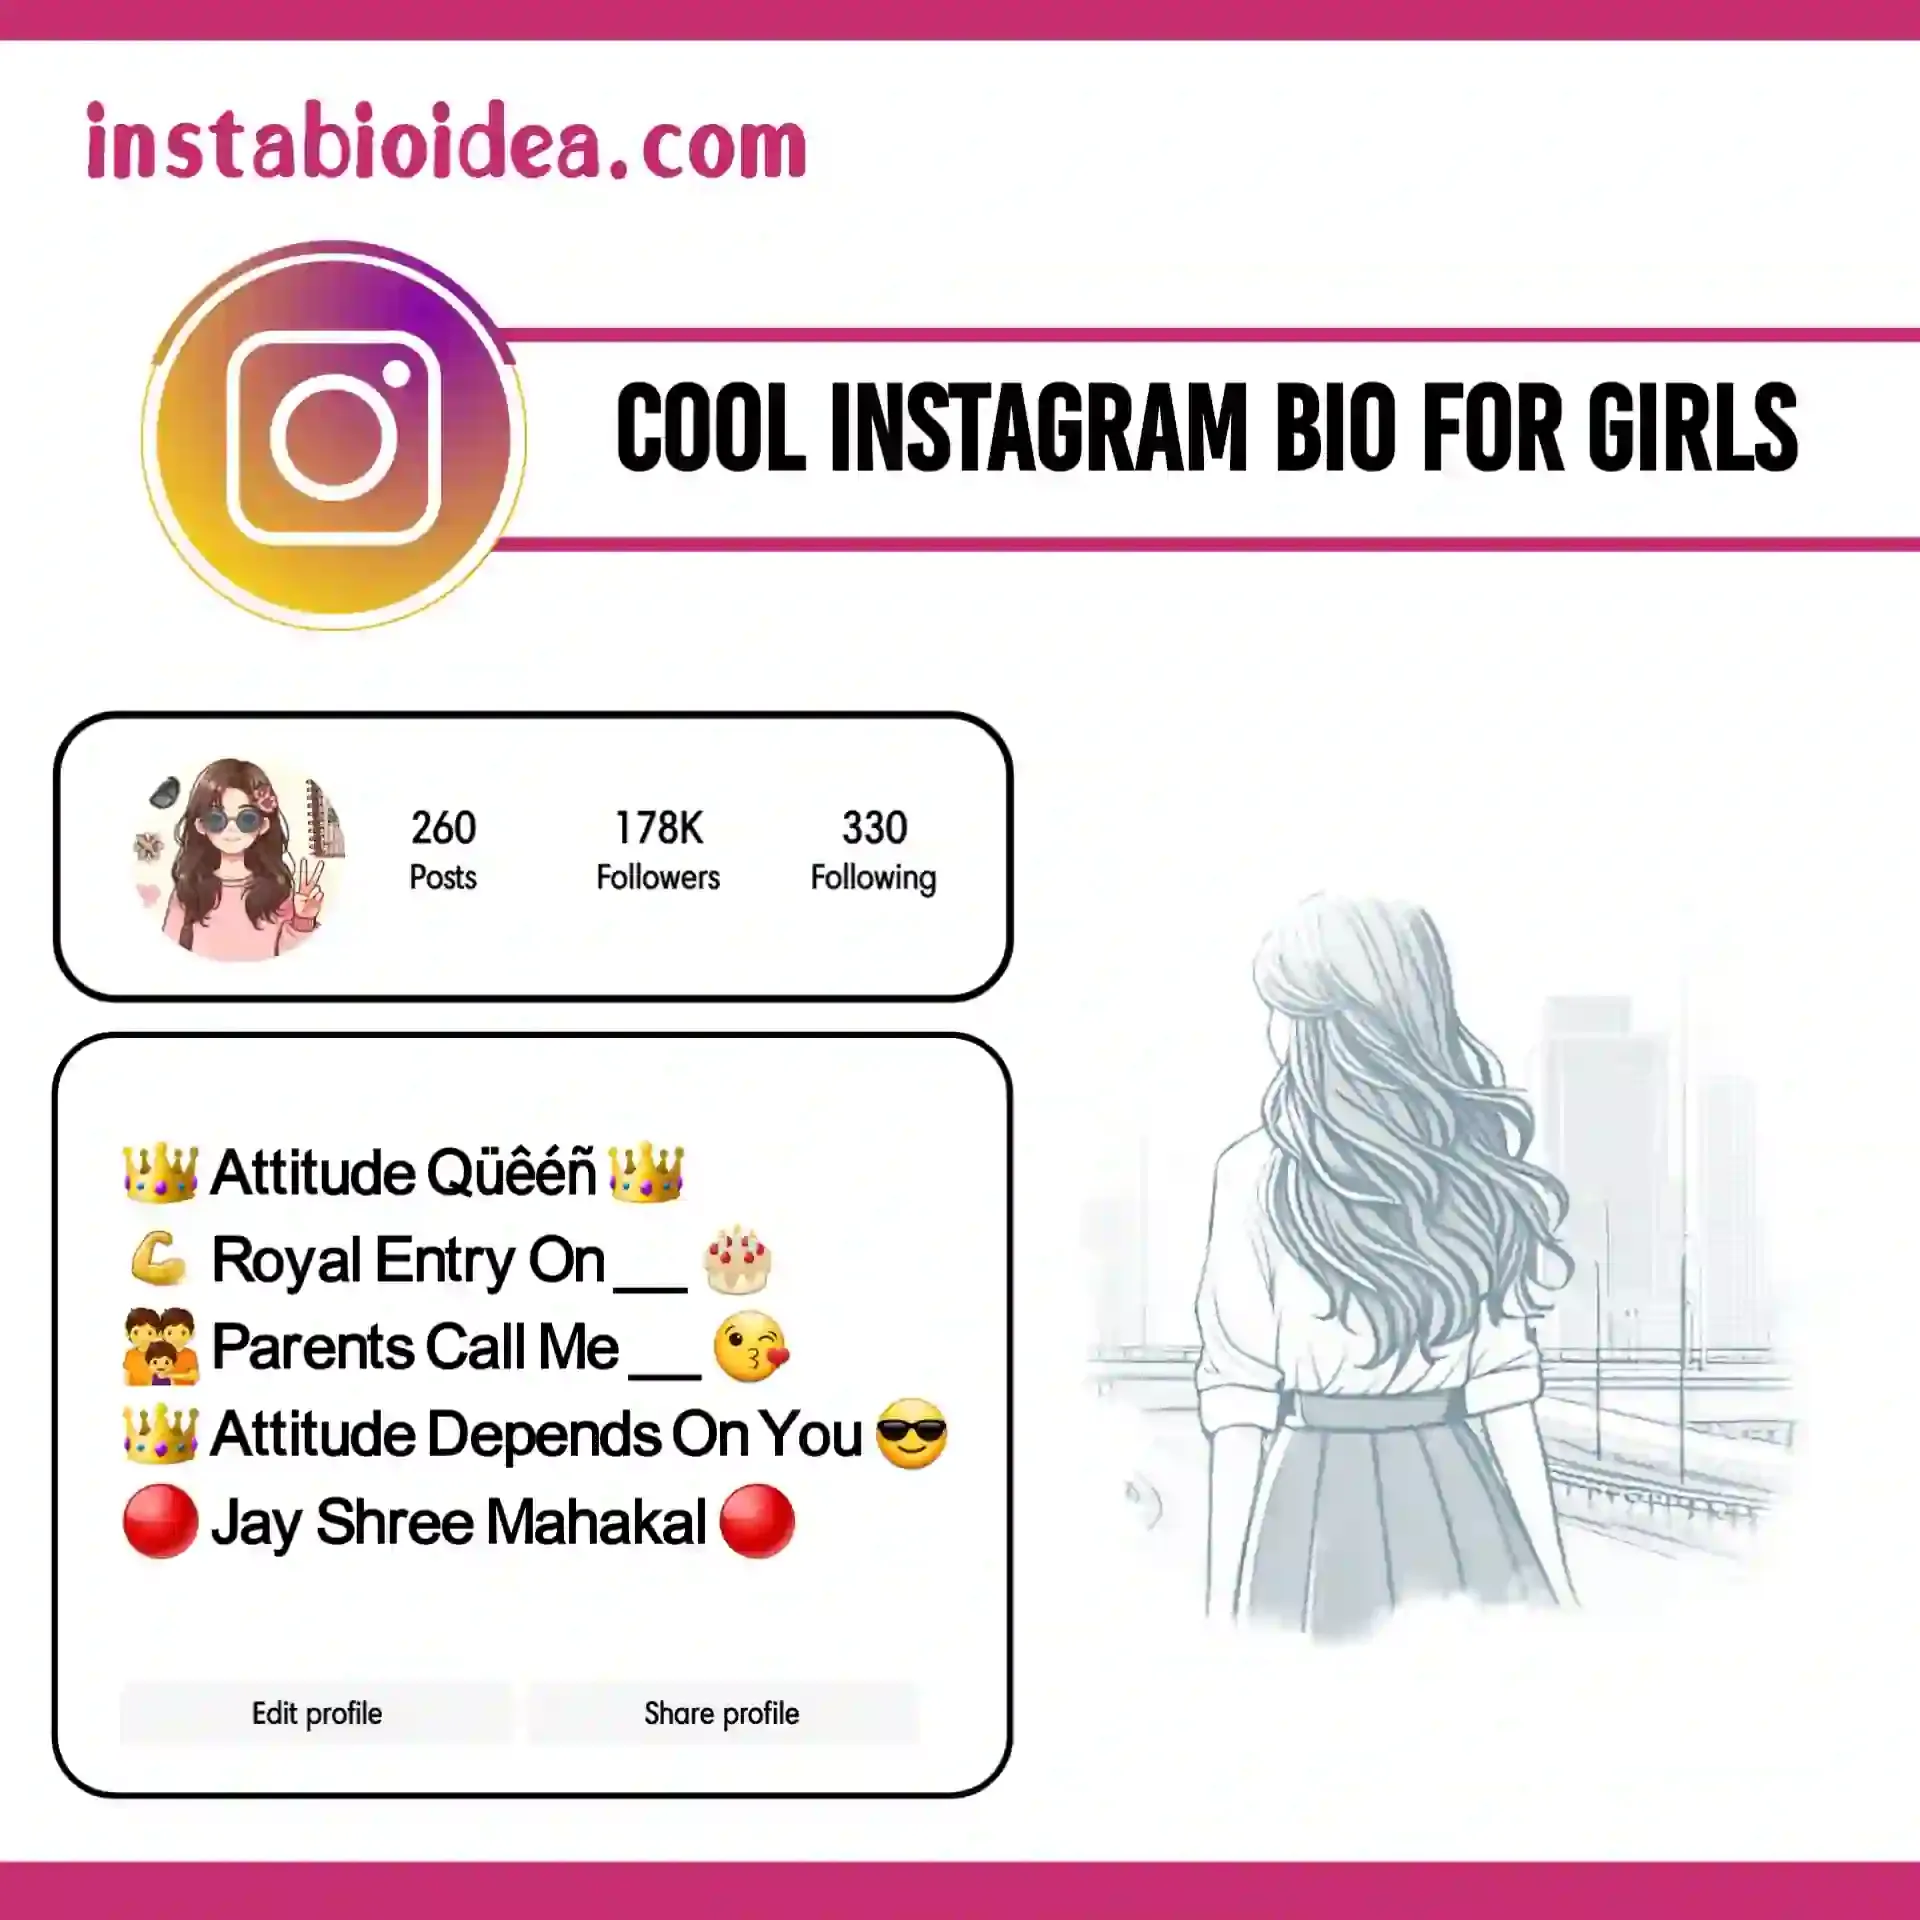 cool instagram bio for girls image